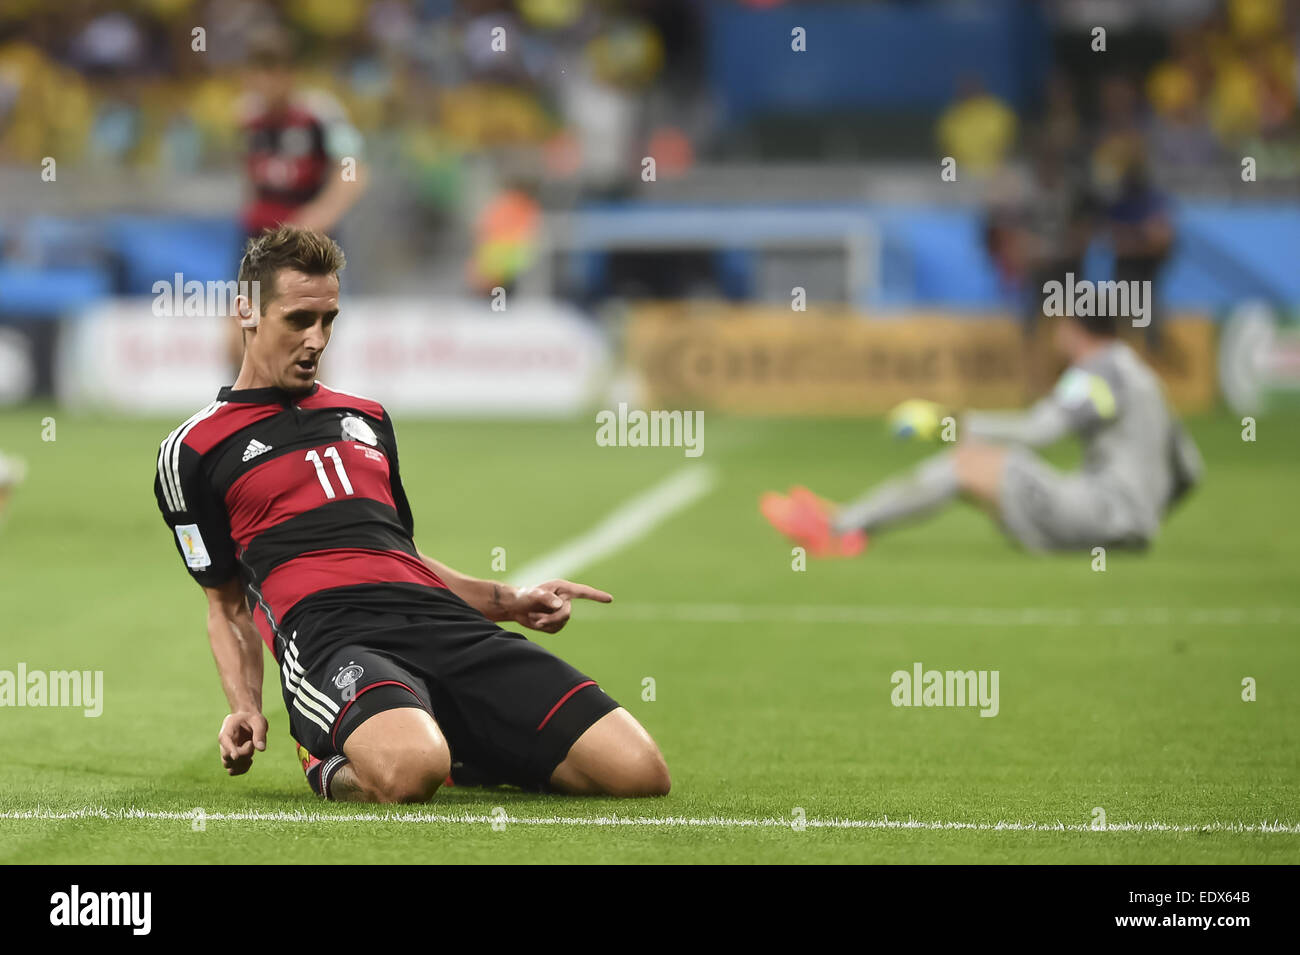 2014 FIFA World Cup semi-final match - Brazil v Germany (1-7) held at Belo Horizonte  Featuring: Miroslav Klose Where: Belo Horizonte, Brazil When: 08 Jul 2014 Stock Photo